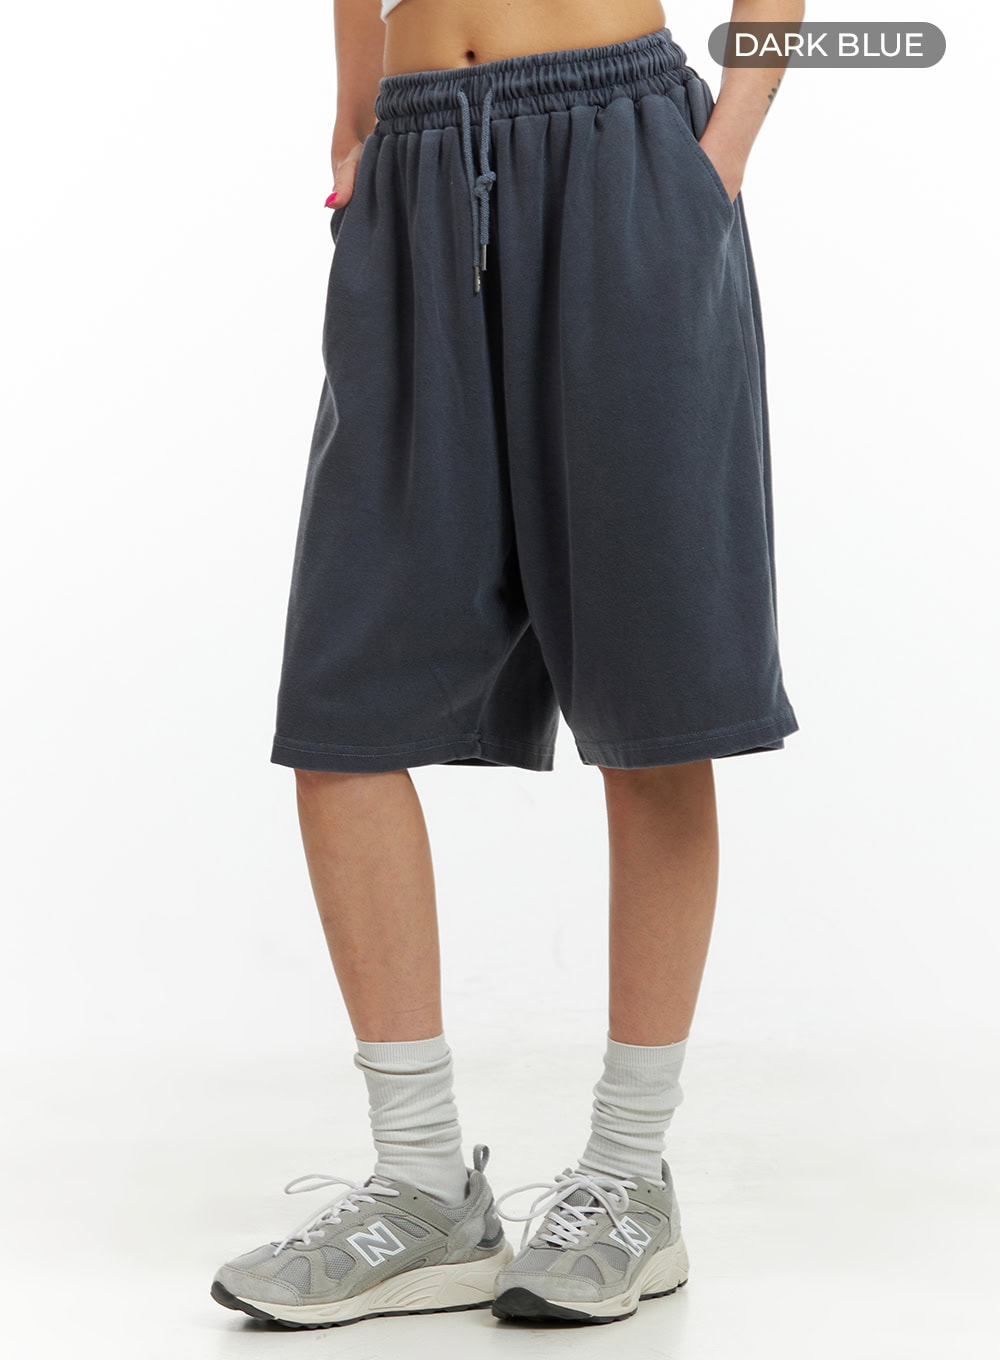 comfy-sweat-shorts-iu419 / Dark blue